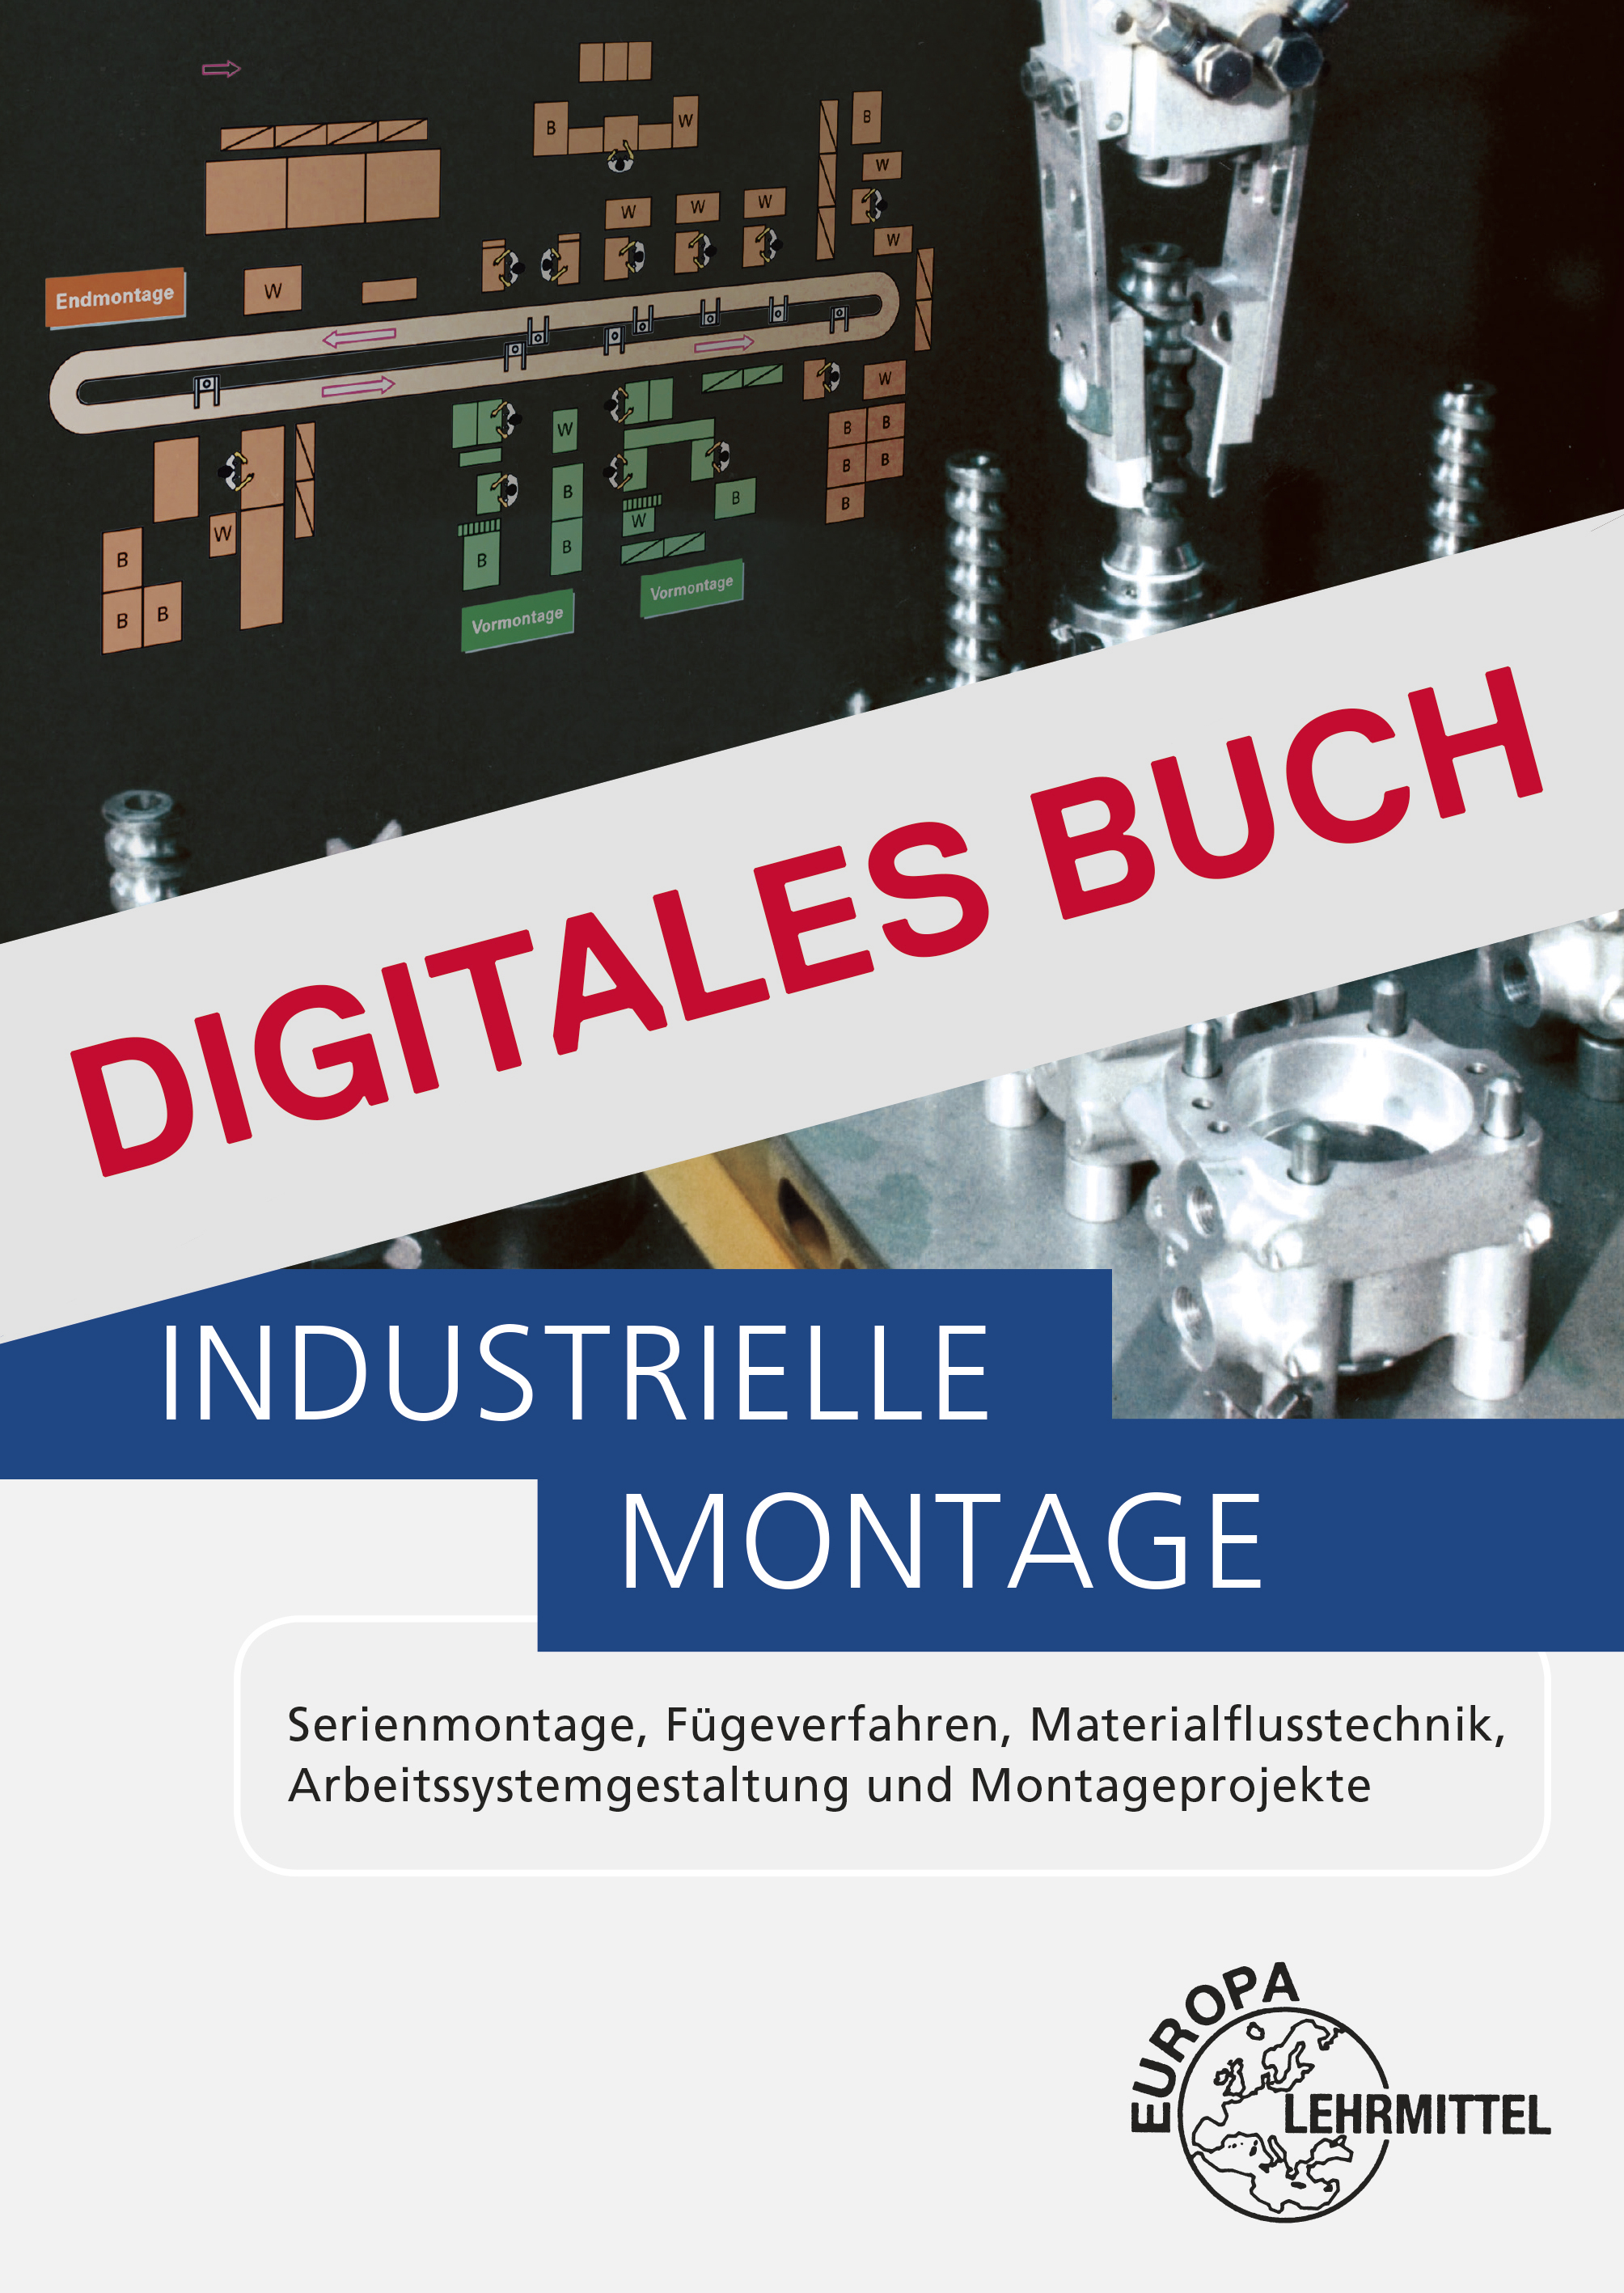 Industrielle Montage - Digitales Buch